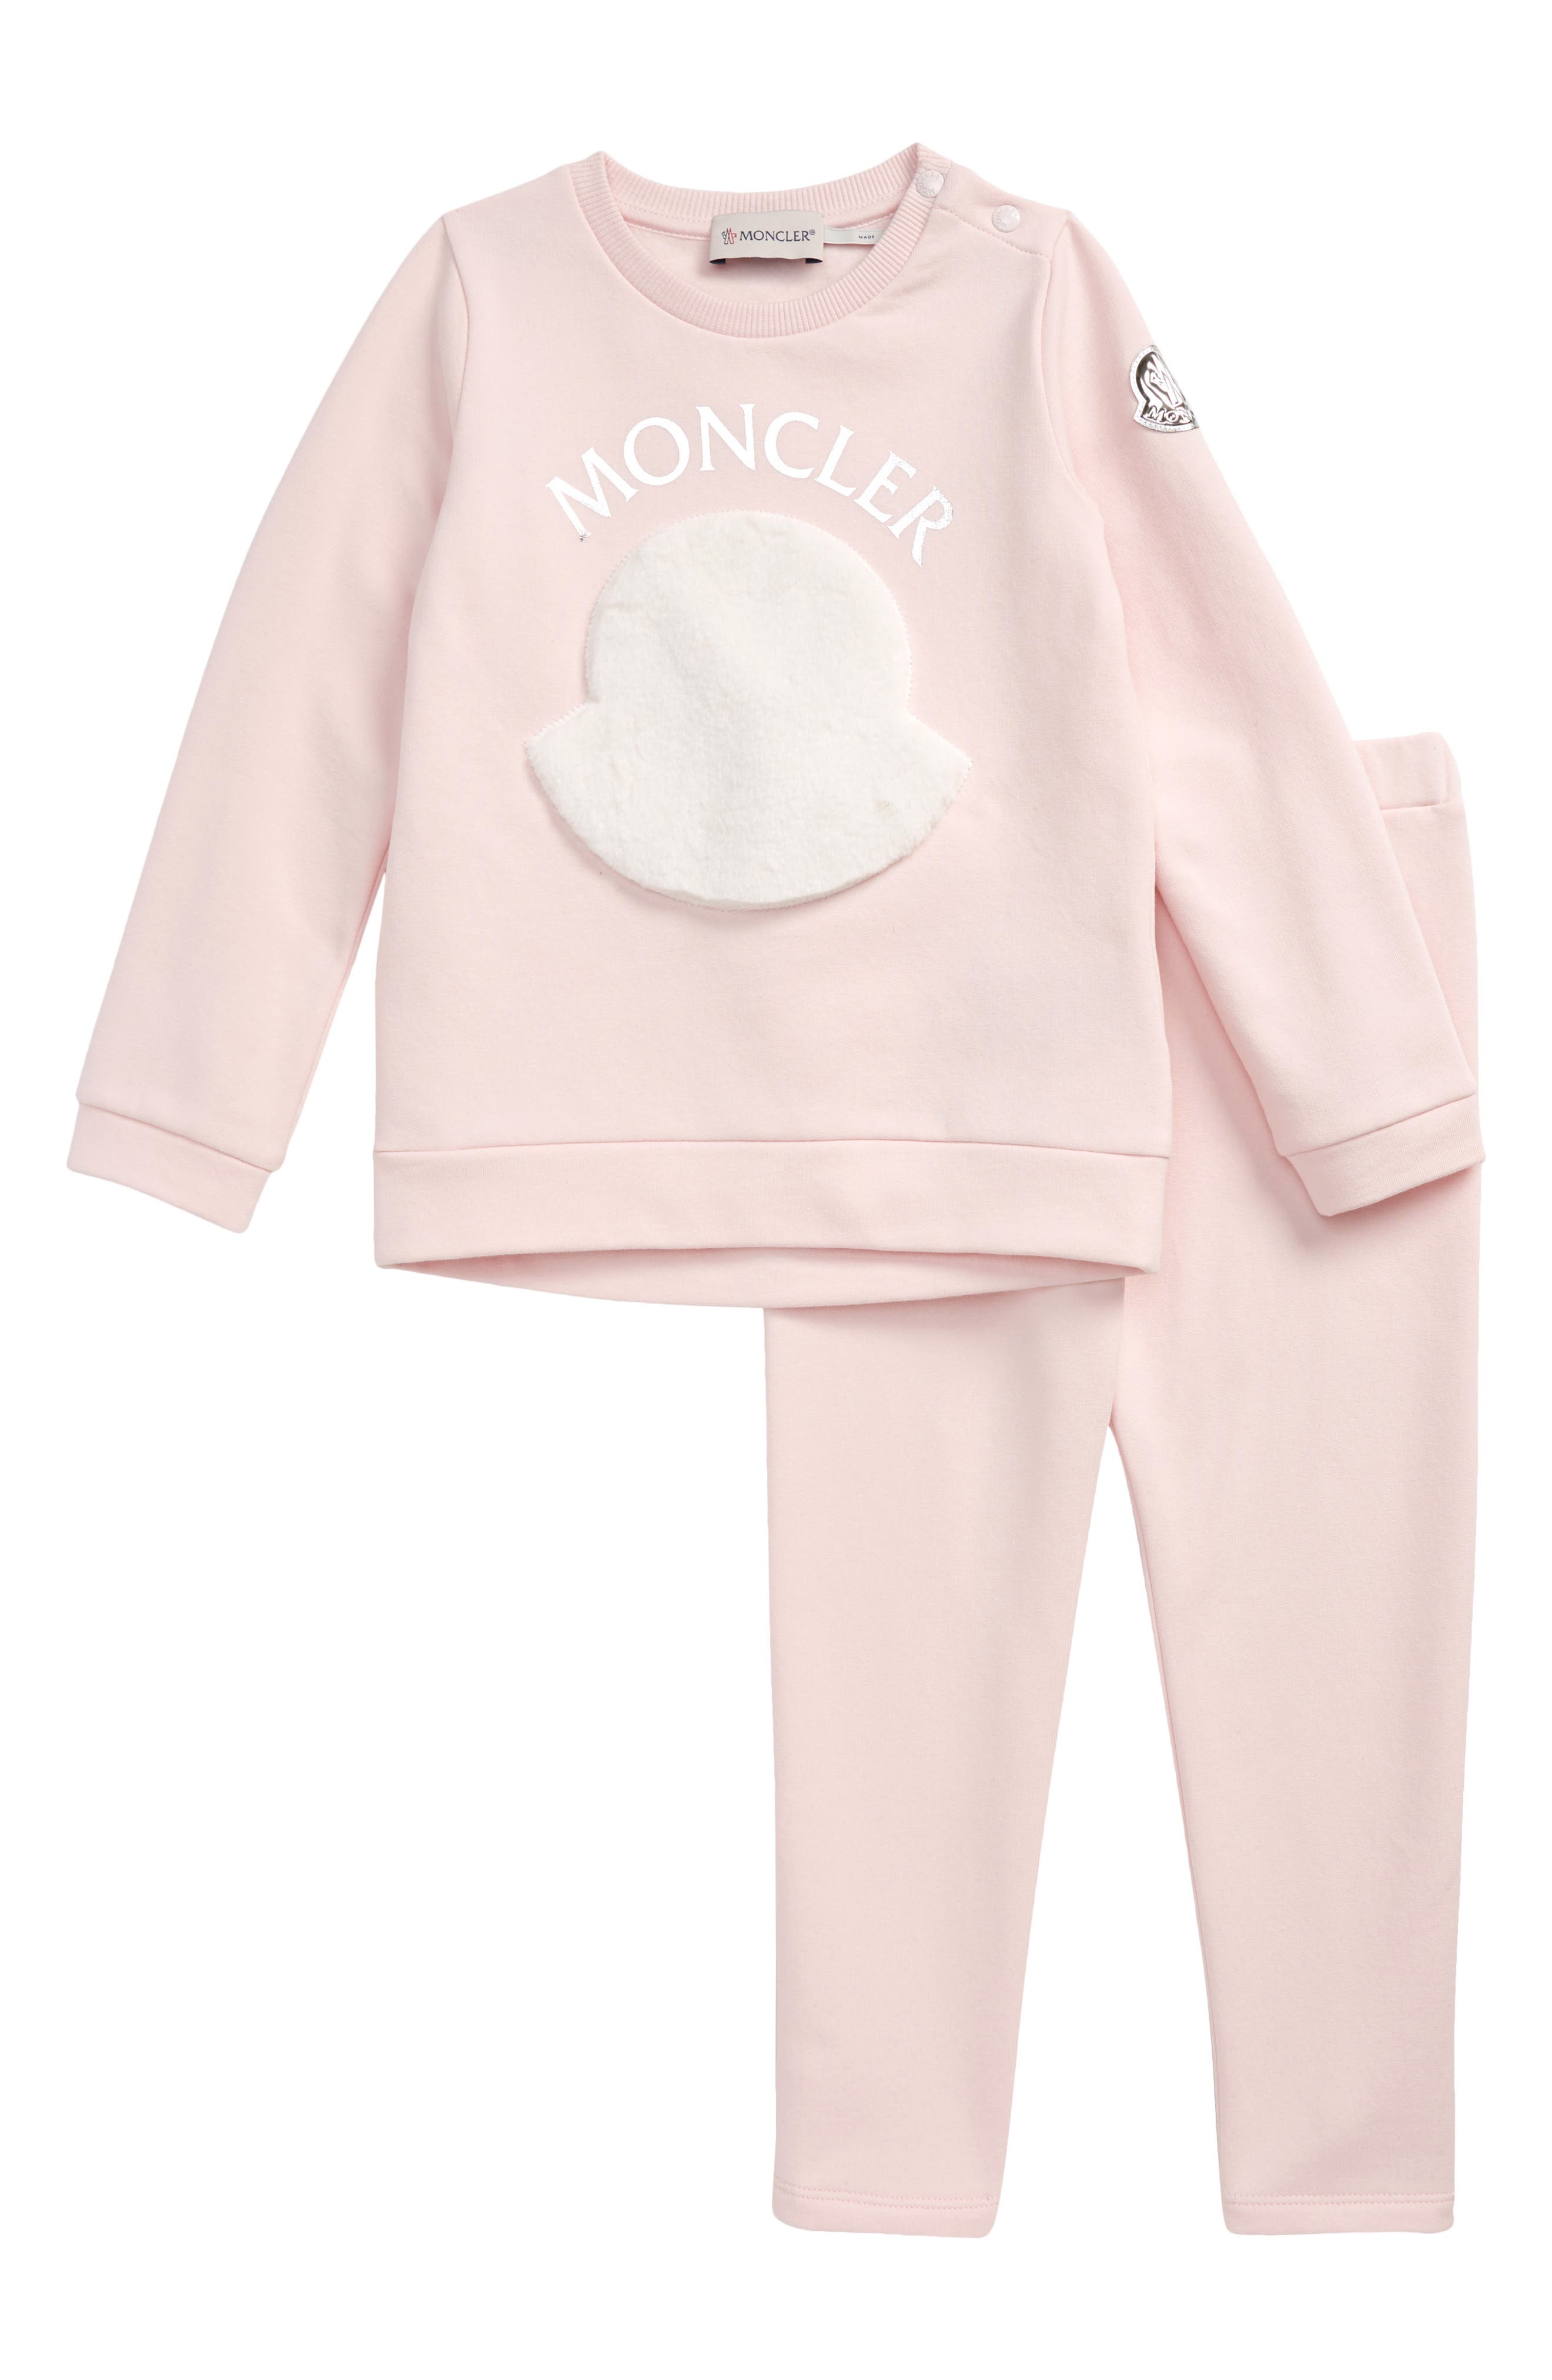 moncler baby clothes